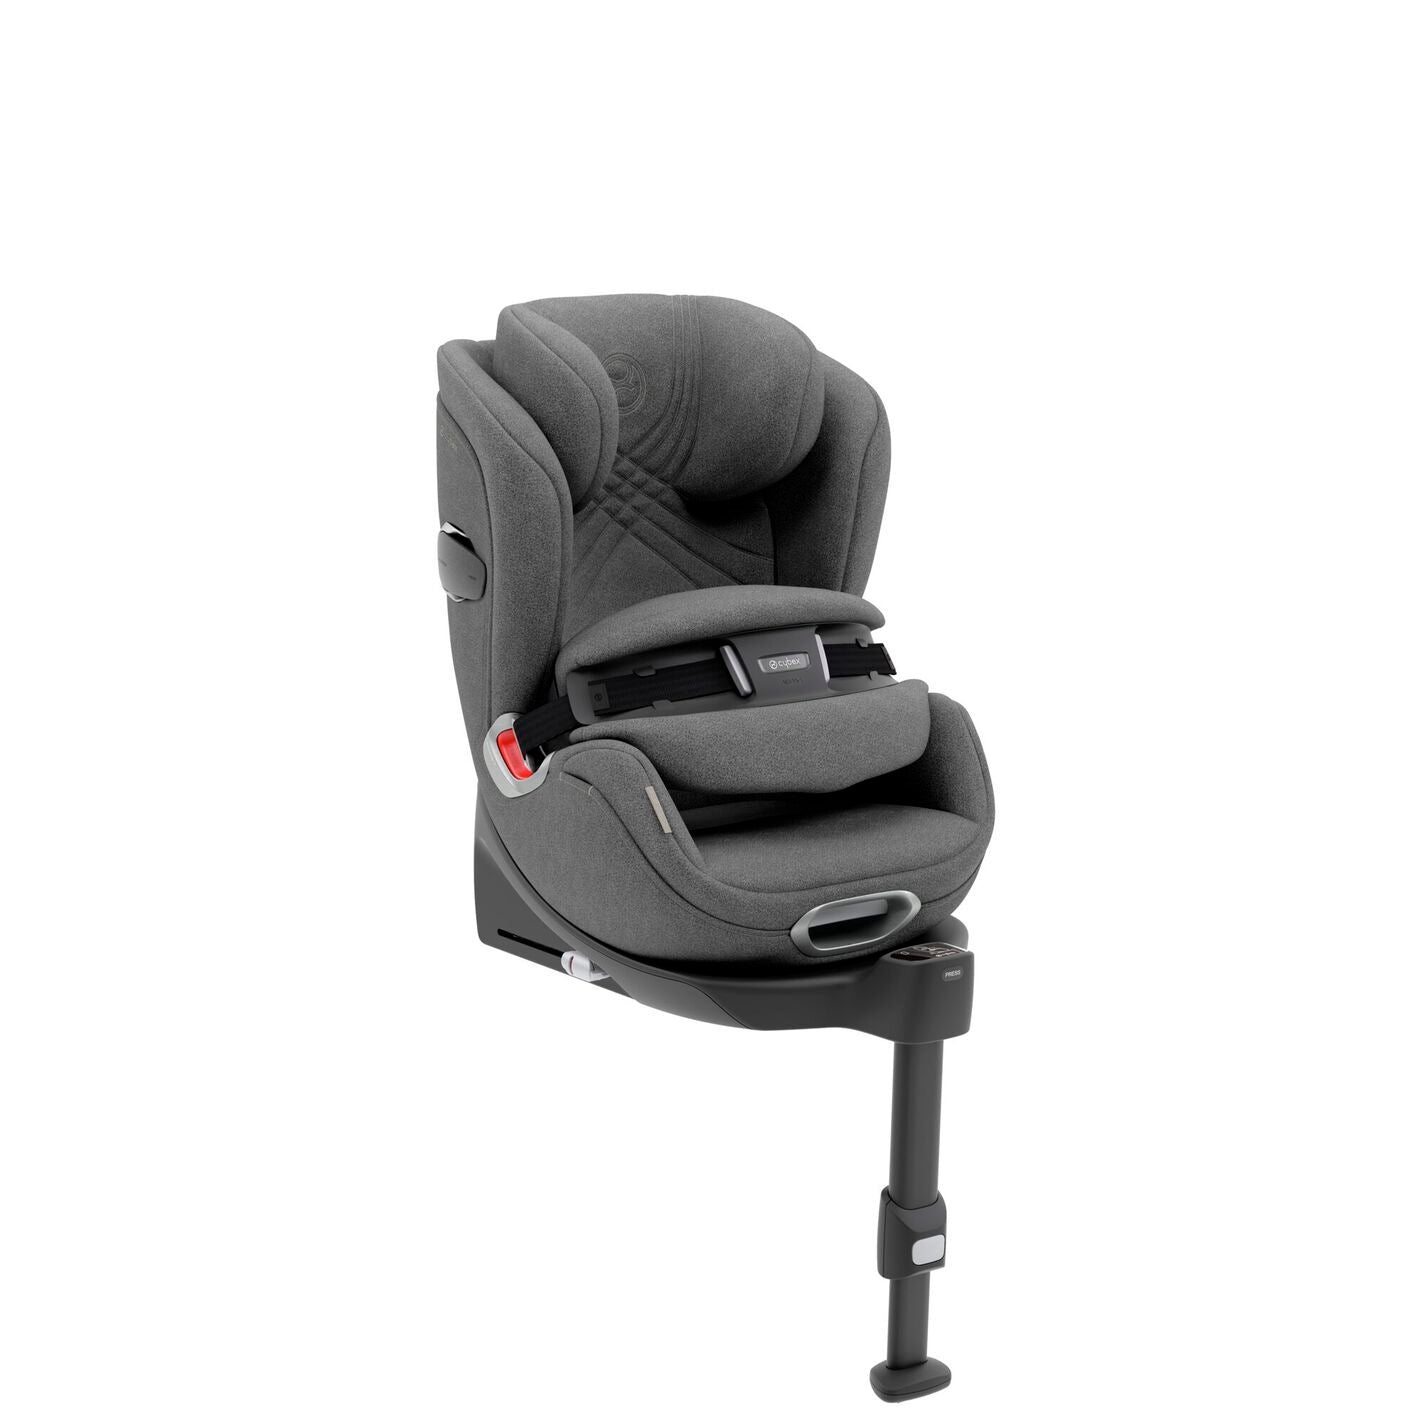 Anoris T i-Size Car Seat (15m-6y)